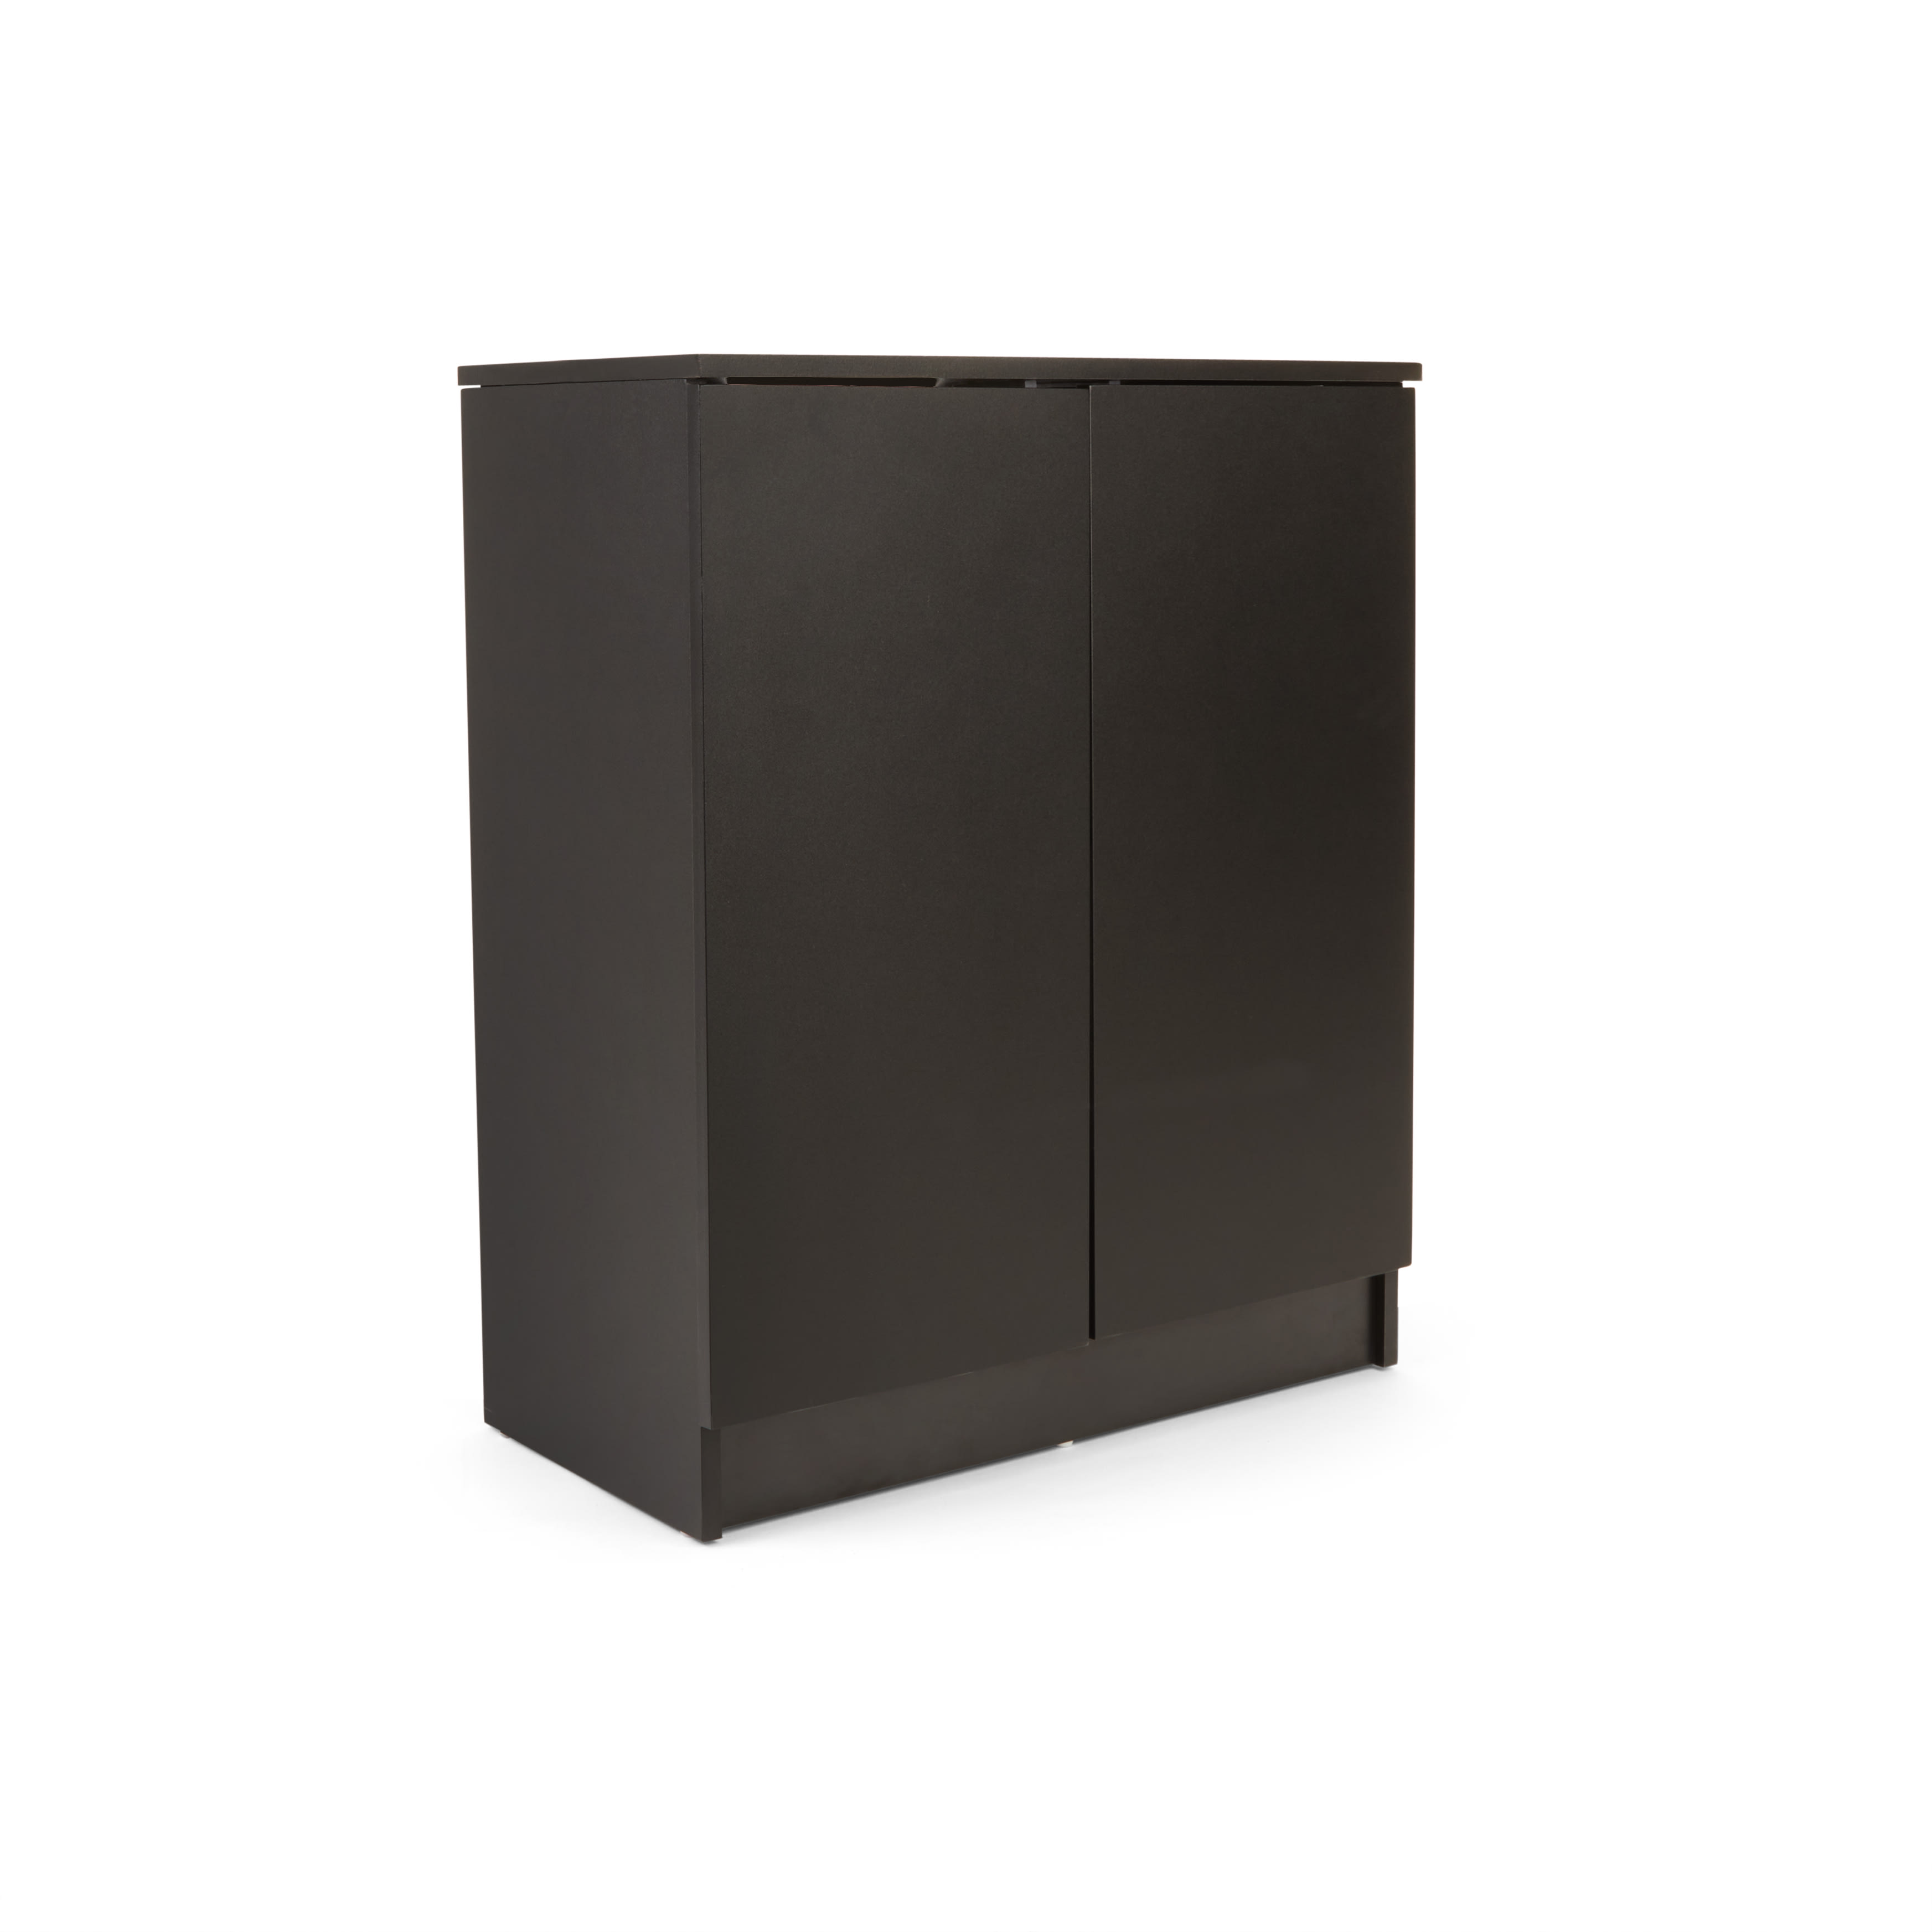 Imagitarium 20 Gallon Modern Cabinet Stand